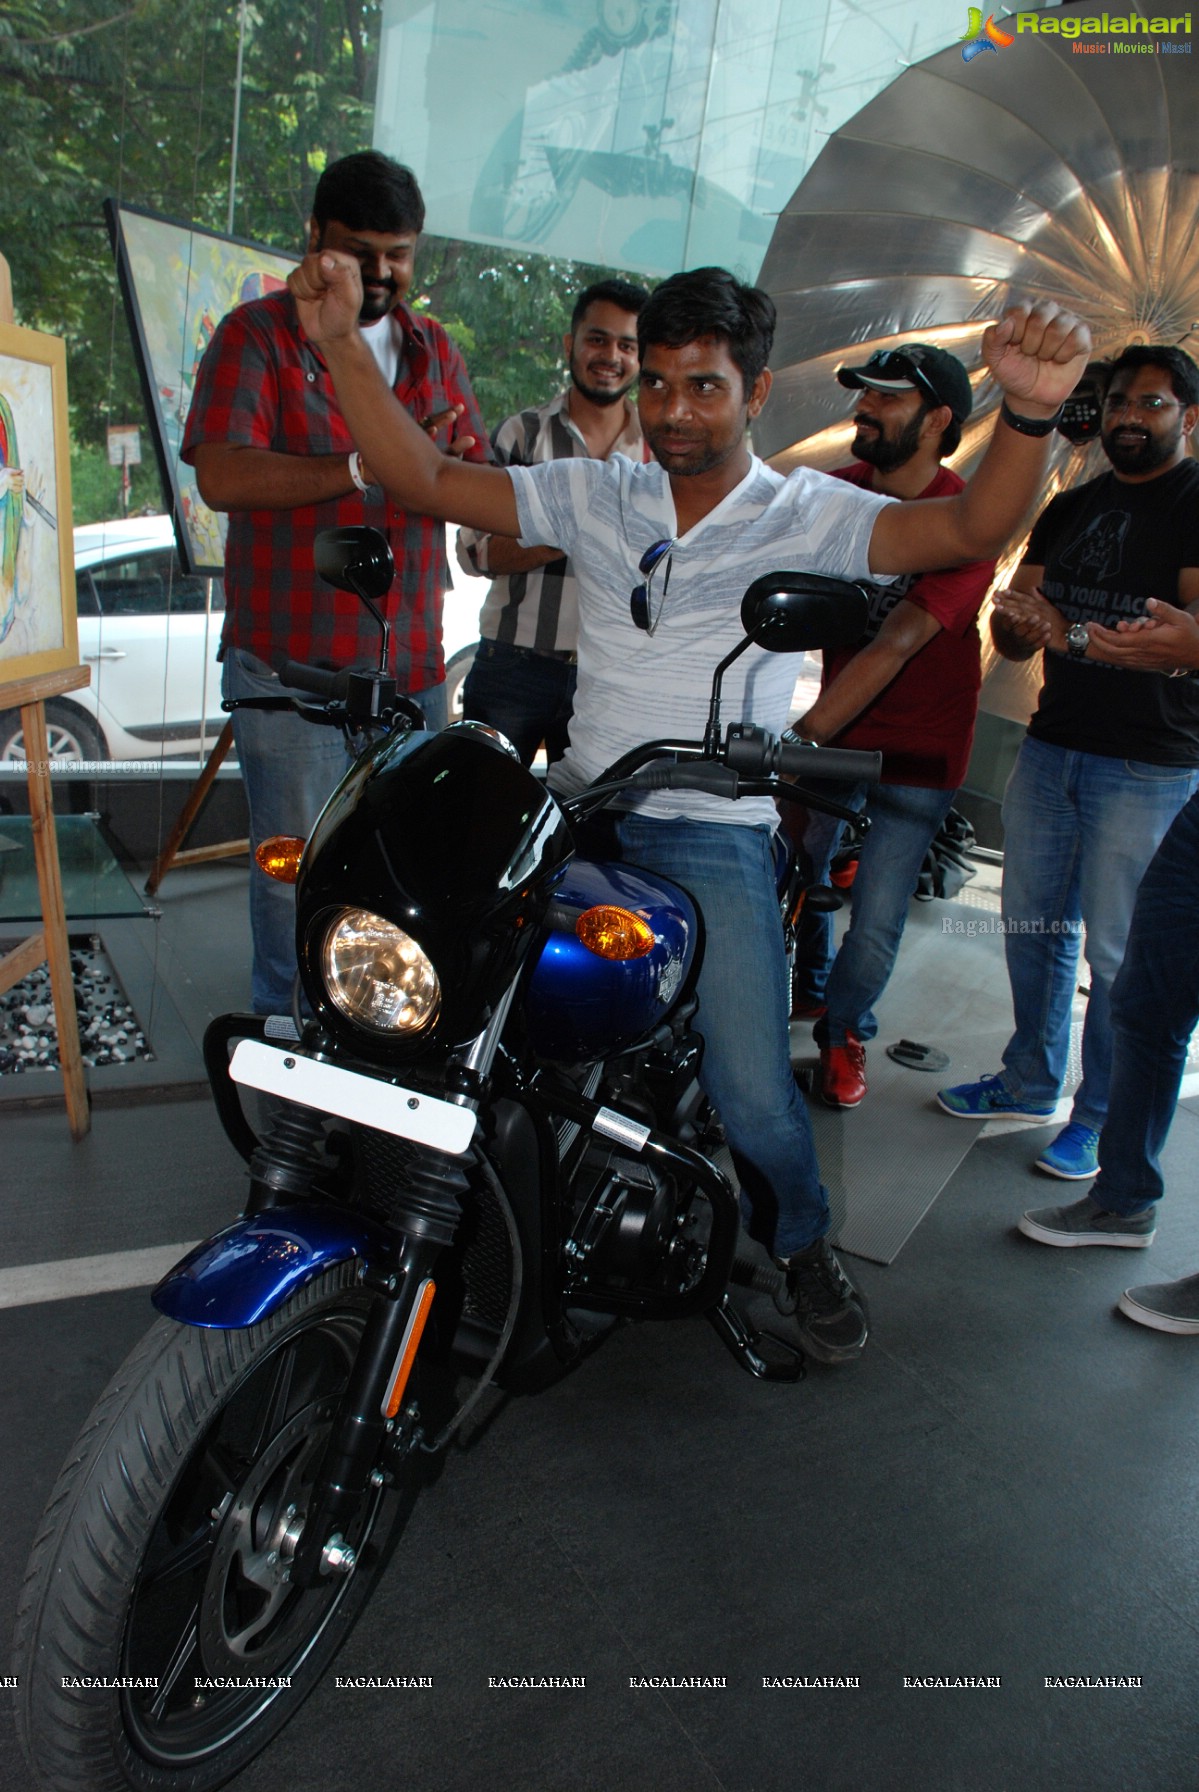 Luxury Brands Display at Harley Davidson Showroom, Hyderabad